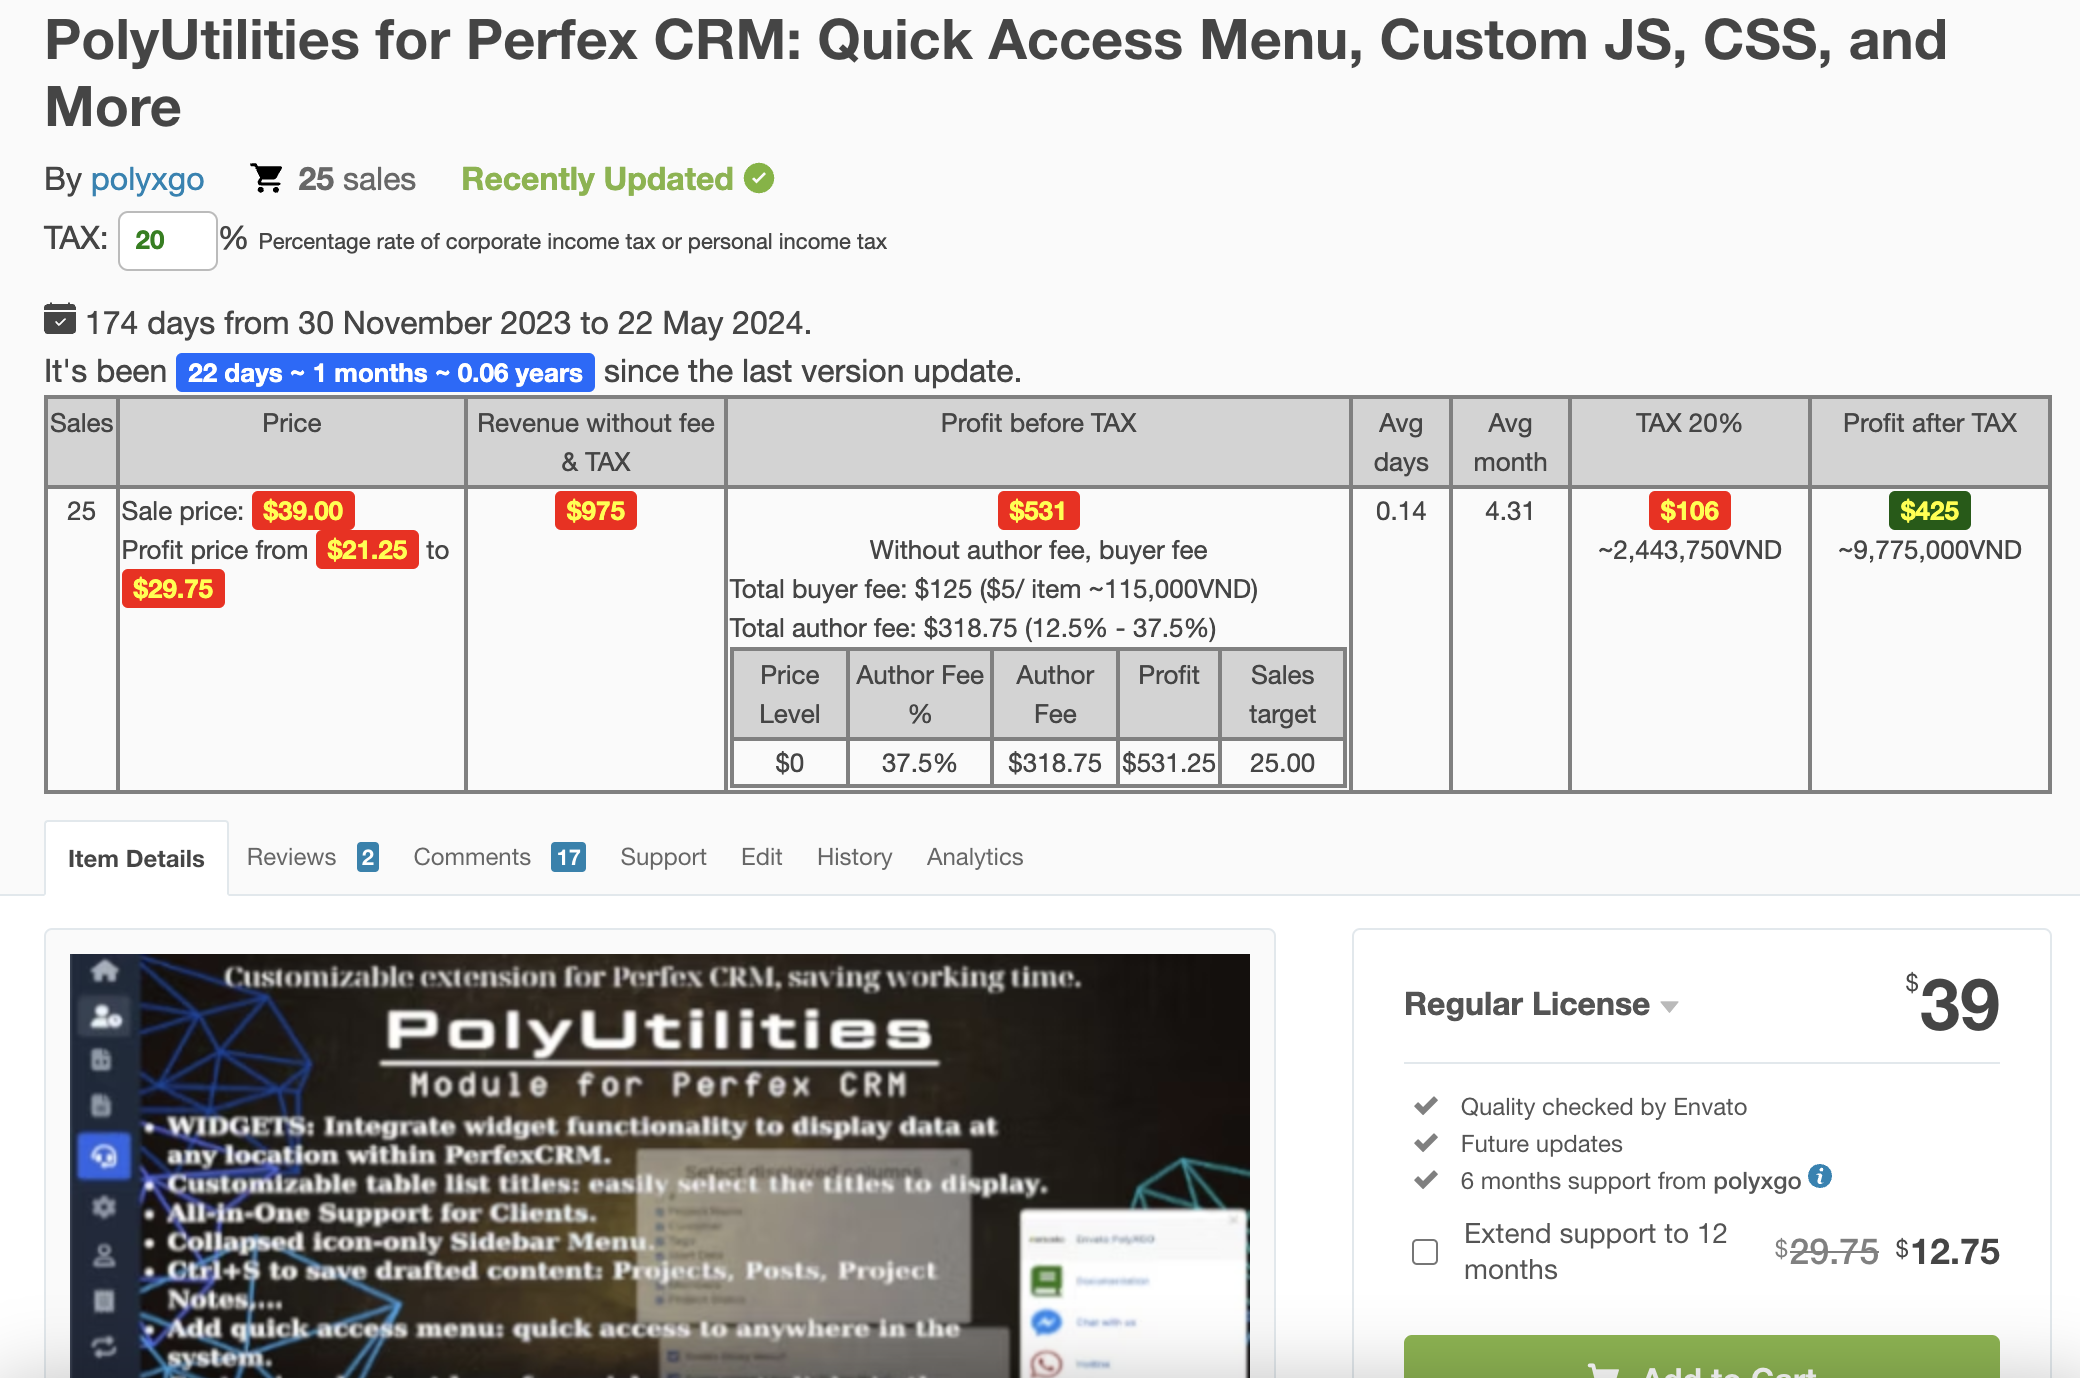 PolyUtilities for Perfex CRM: Quick Access Menu, Custom JS, CSS, and More